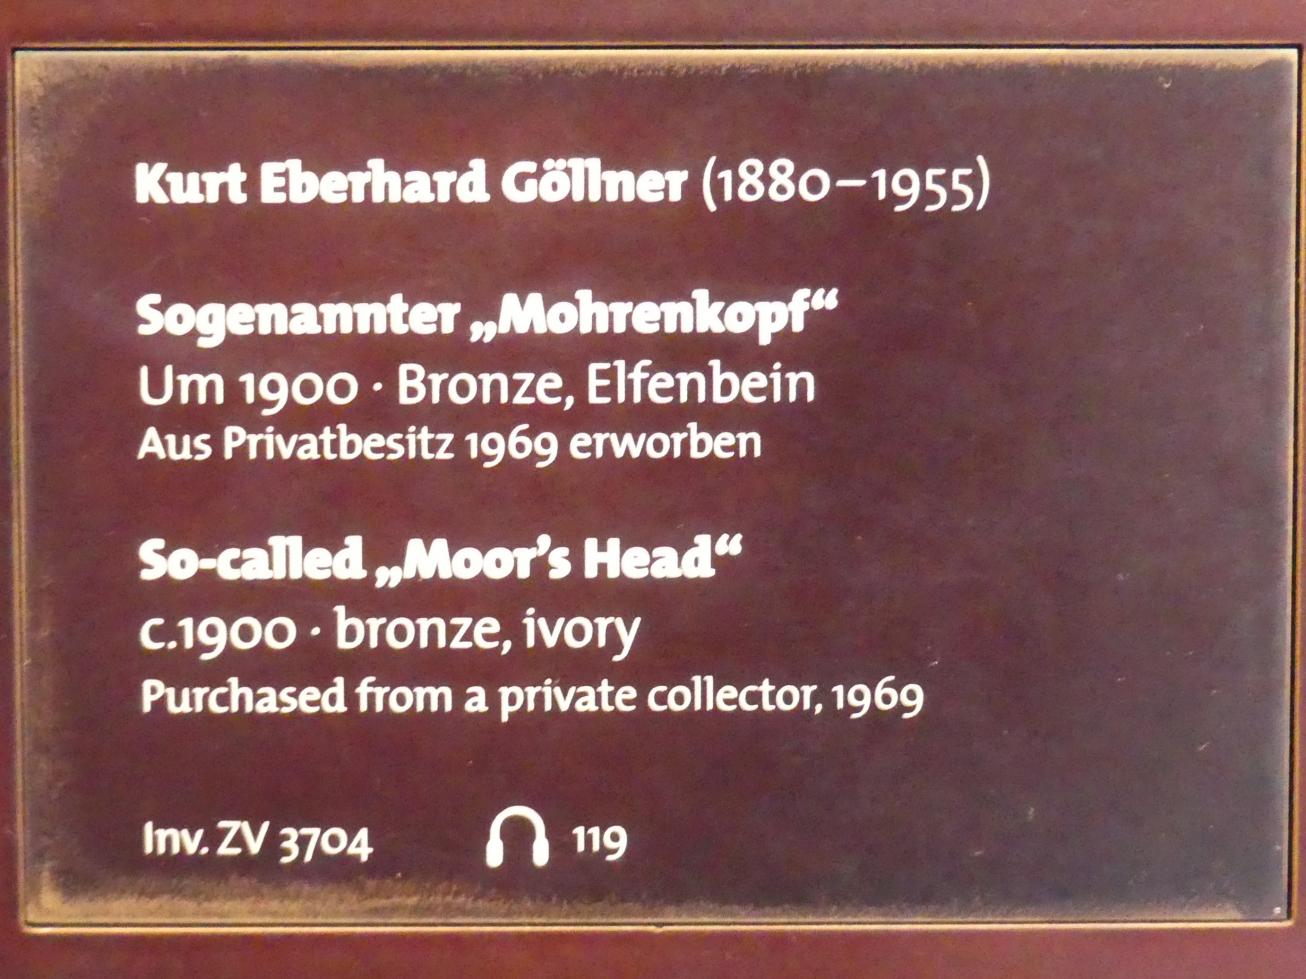 Kurt Eberhard Goellner (1900), Sogenannter "Mohrenkopf", Dresden, Albertinum, Galerie Neue Meister, 1. Obergeschoss, Klingersaal, um 1900, Bild 3/3